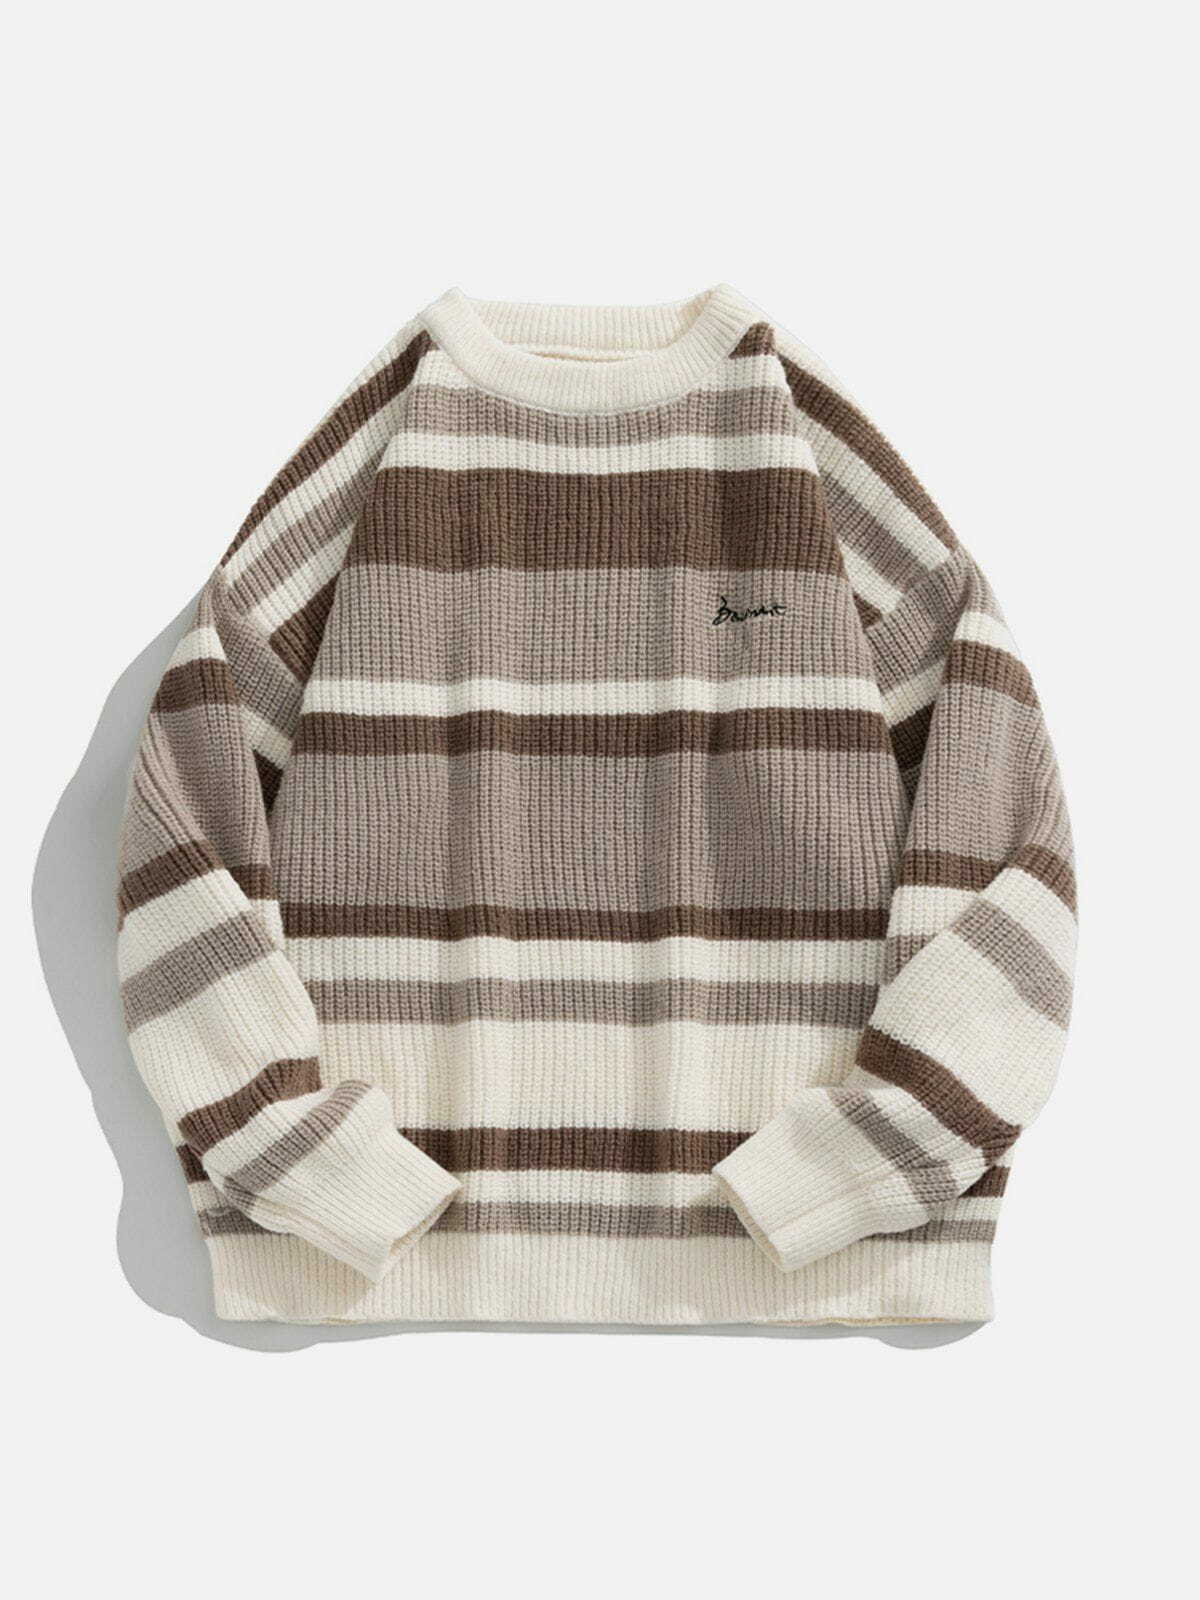 color block striped sweater edgy retro y2k fashion 1426